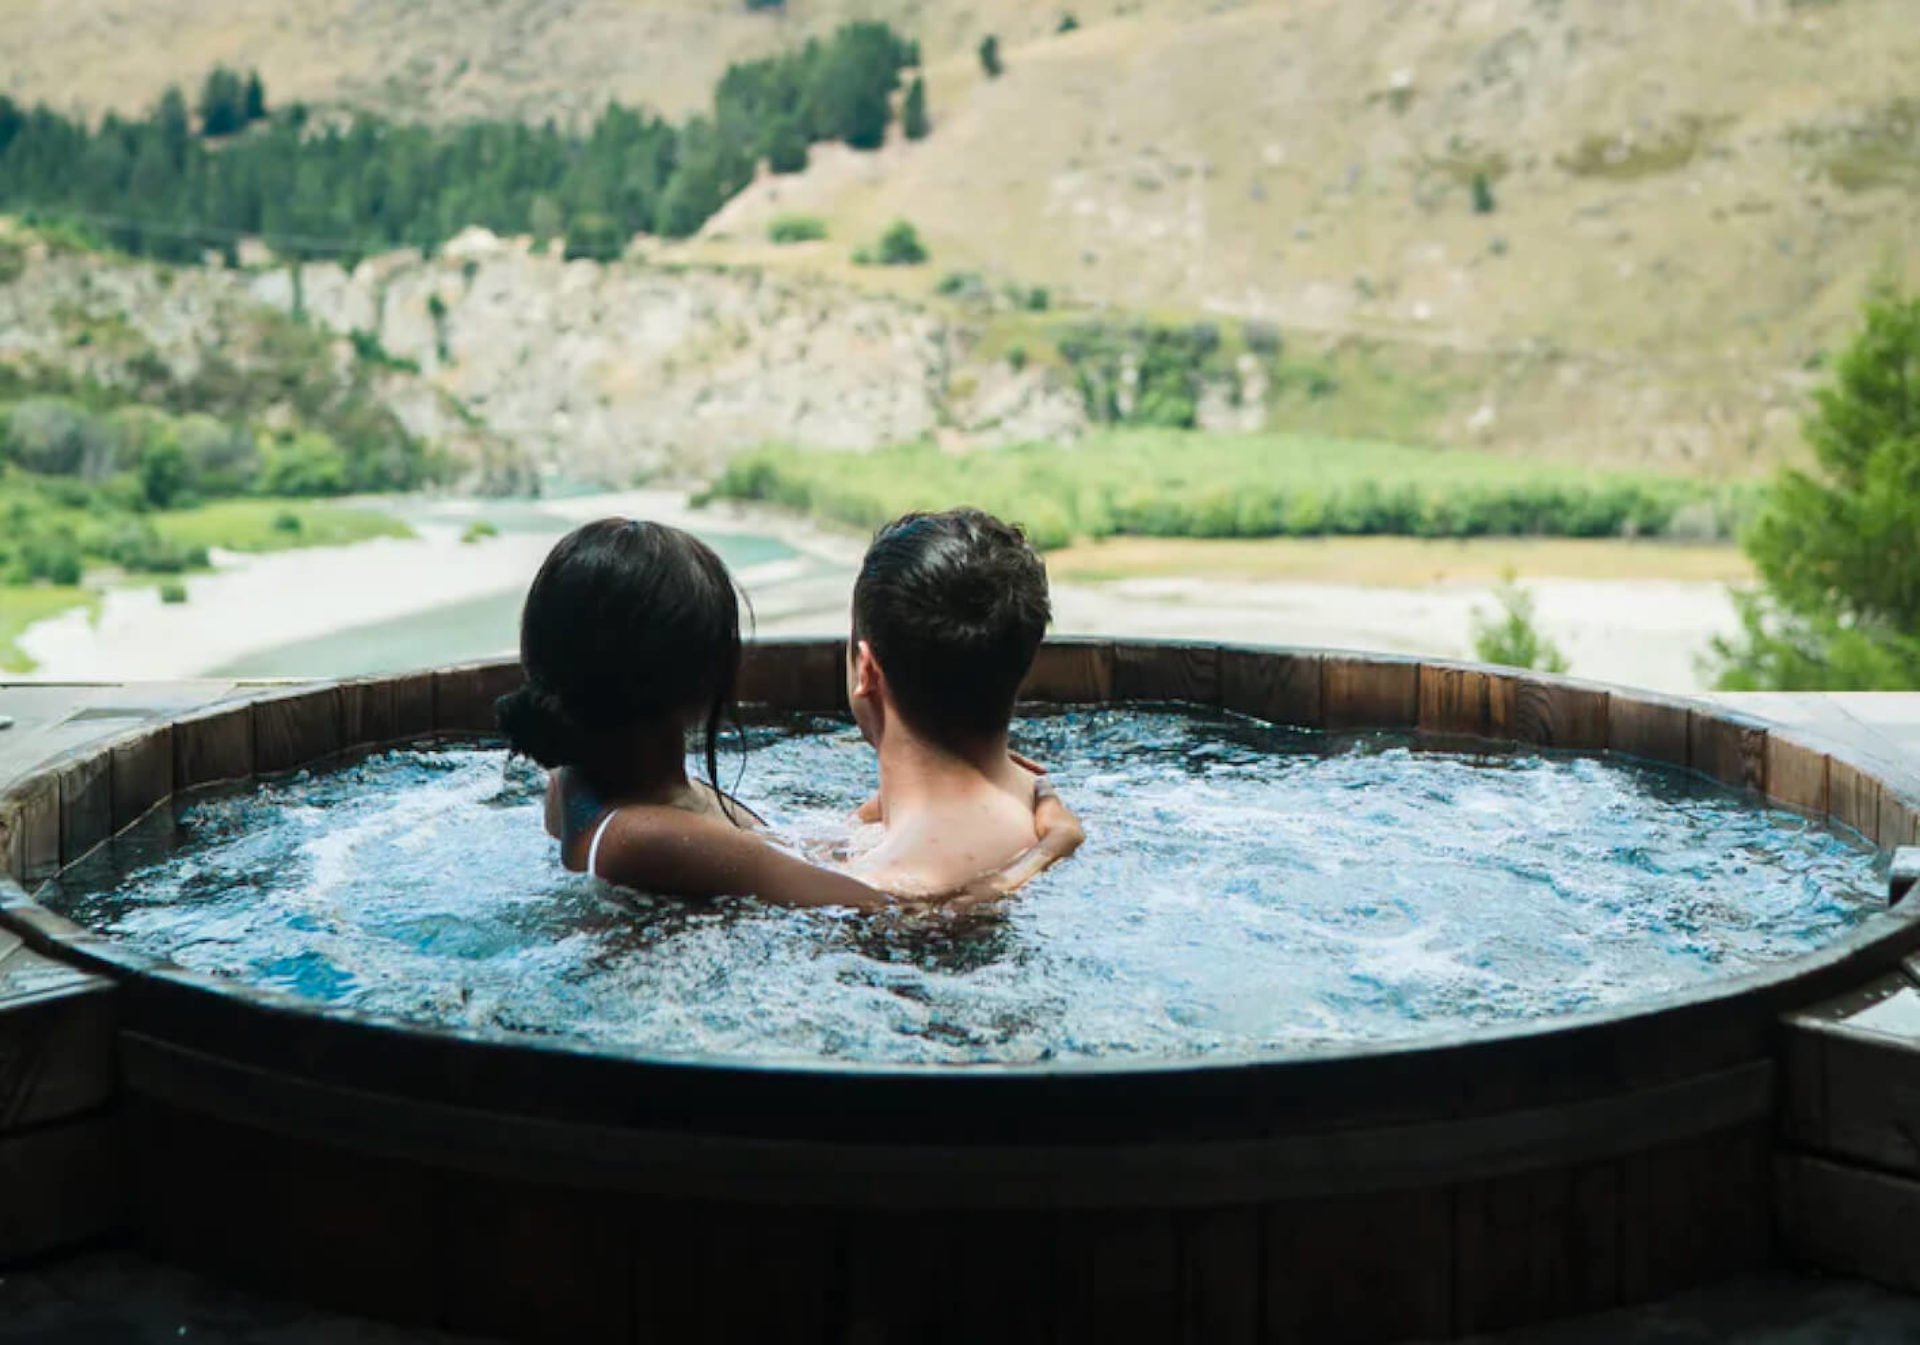 Interracial couple enjoying a luxury hot tub